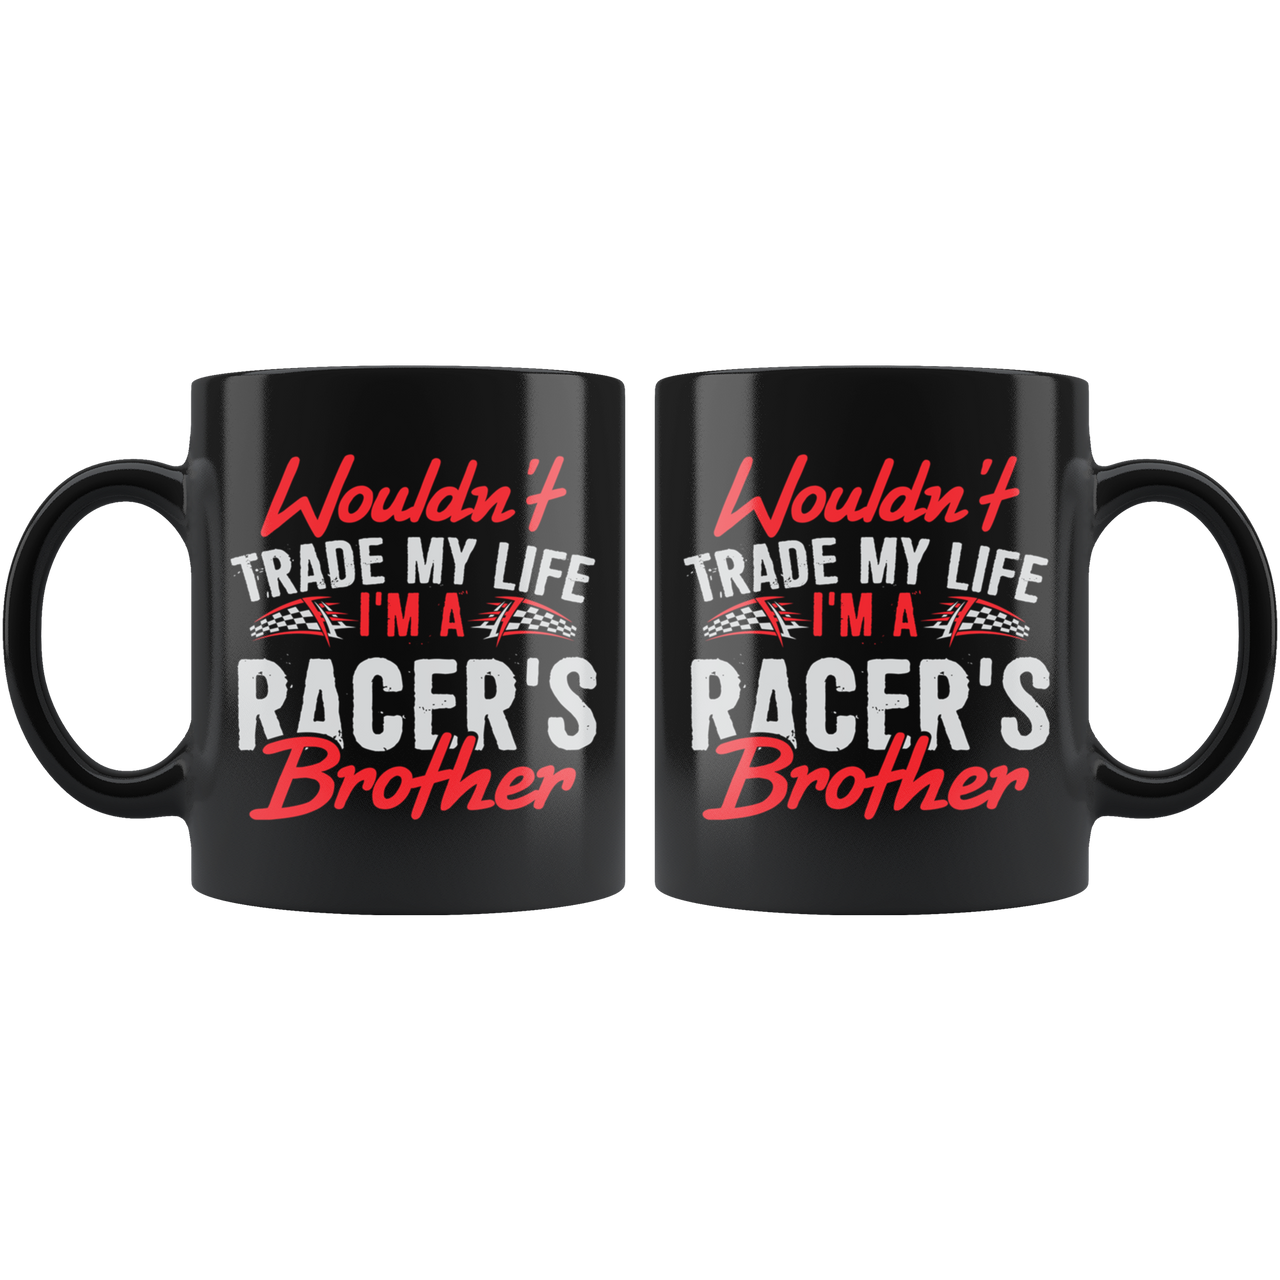 Wouldn't Trade My Life I'm A Racer's Brother Mug!